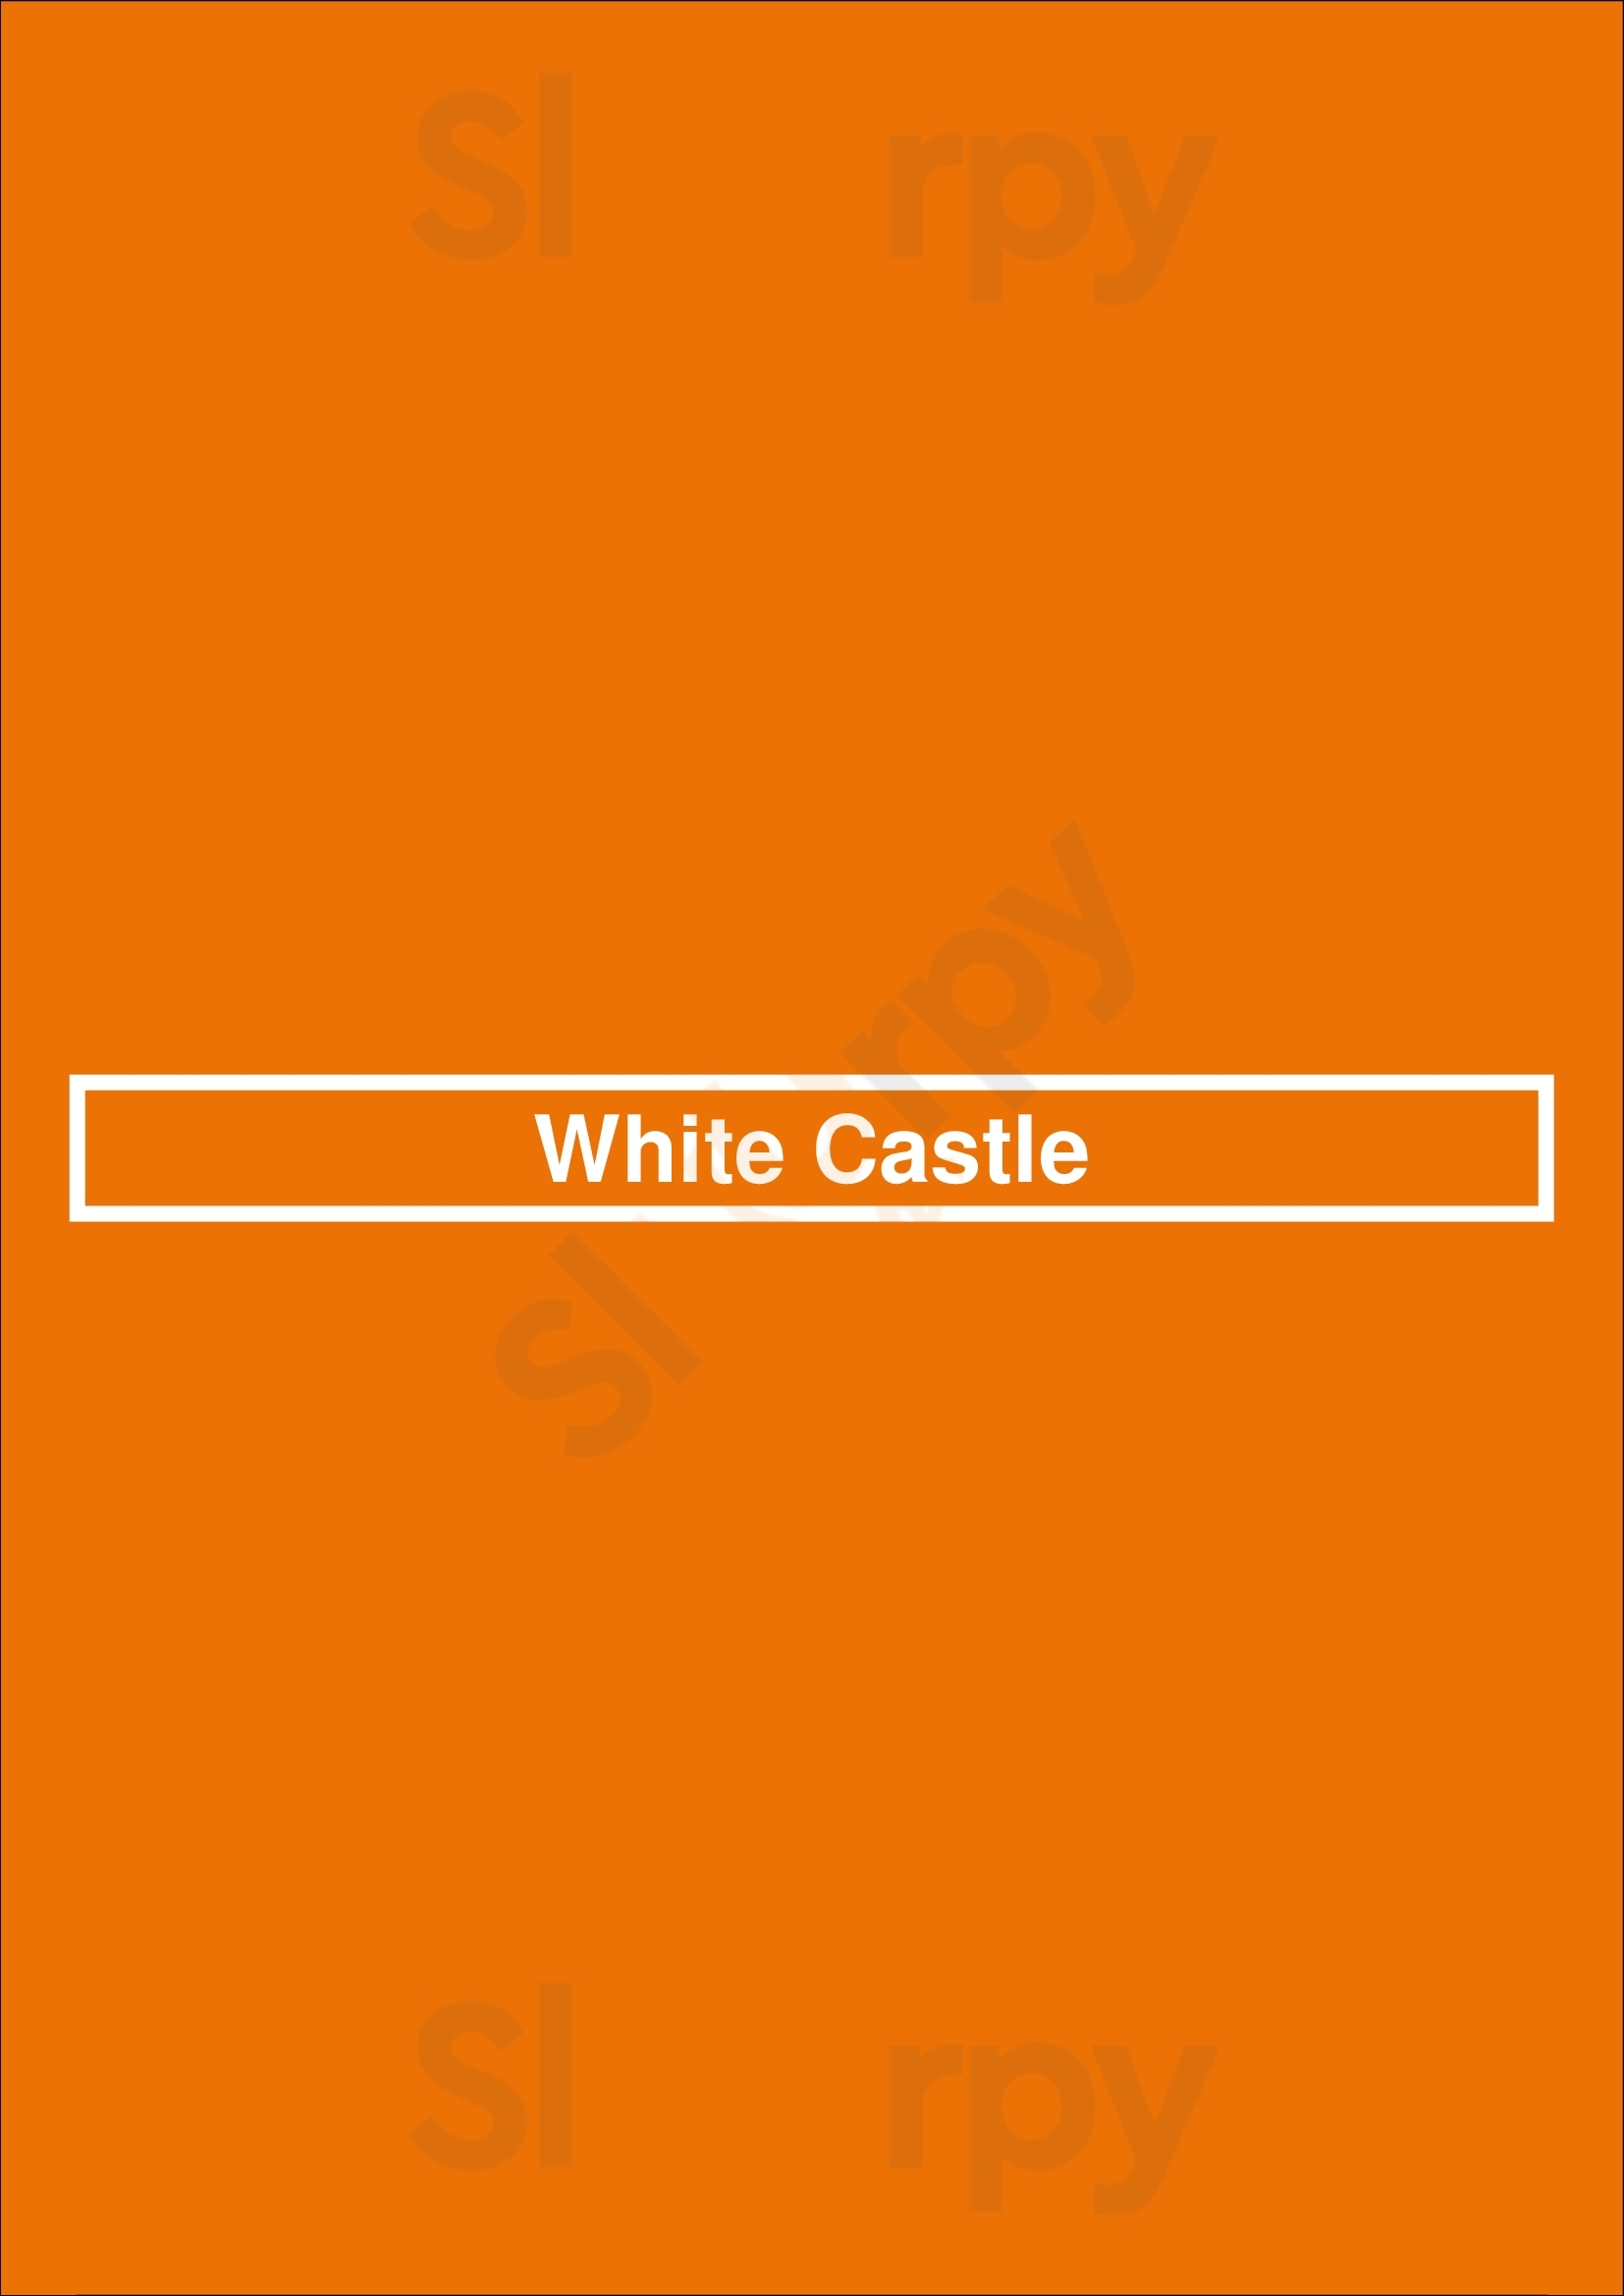 White Castle Springfield Menu - 1